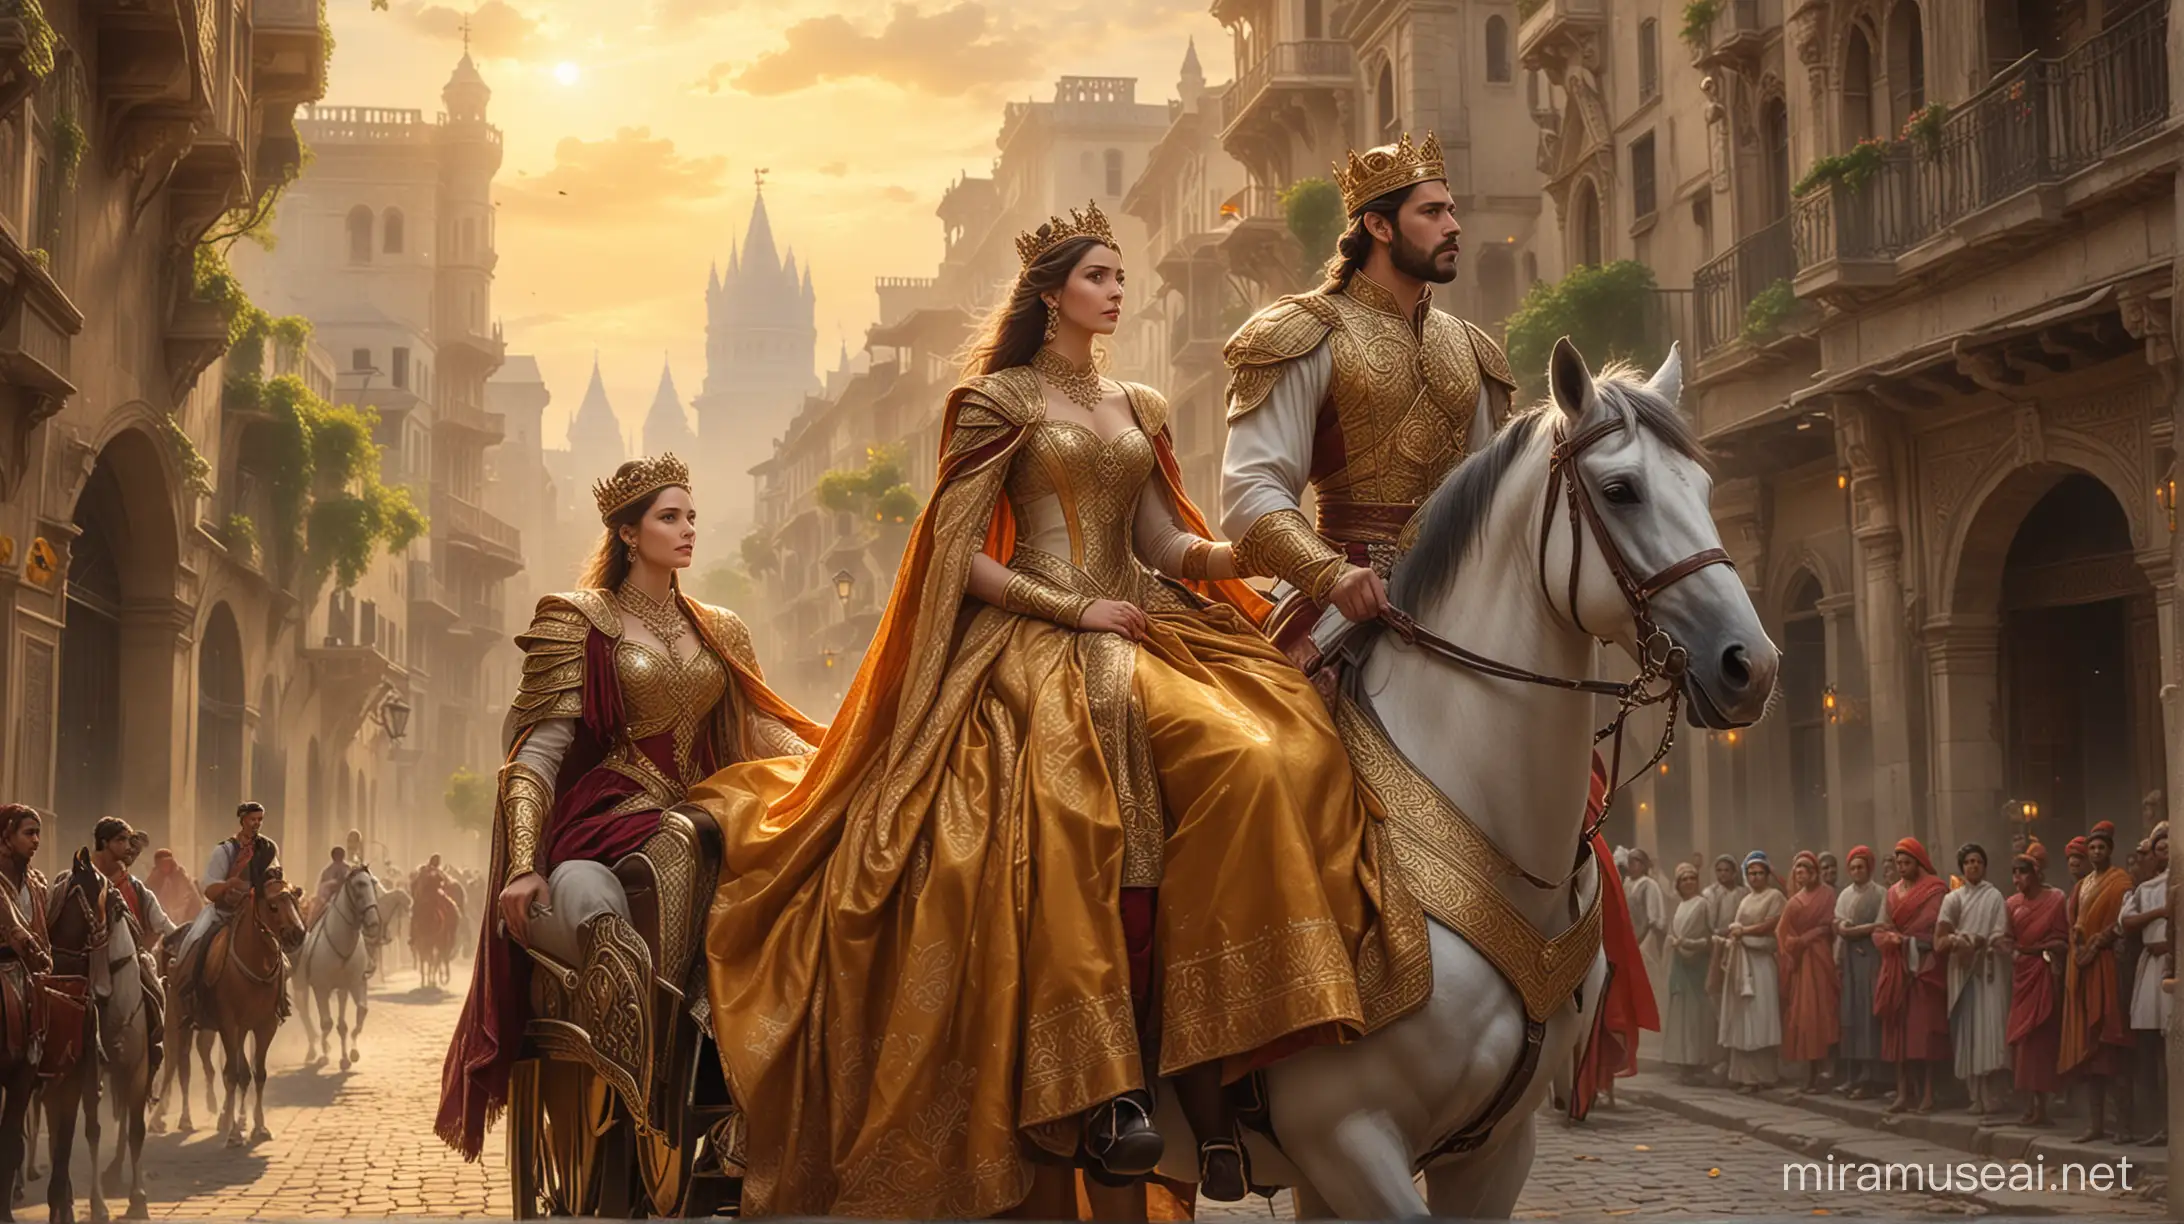 Majestic King and Elegant Queen Riding Through Splendid Kingdom